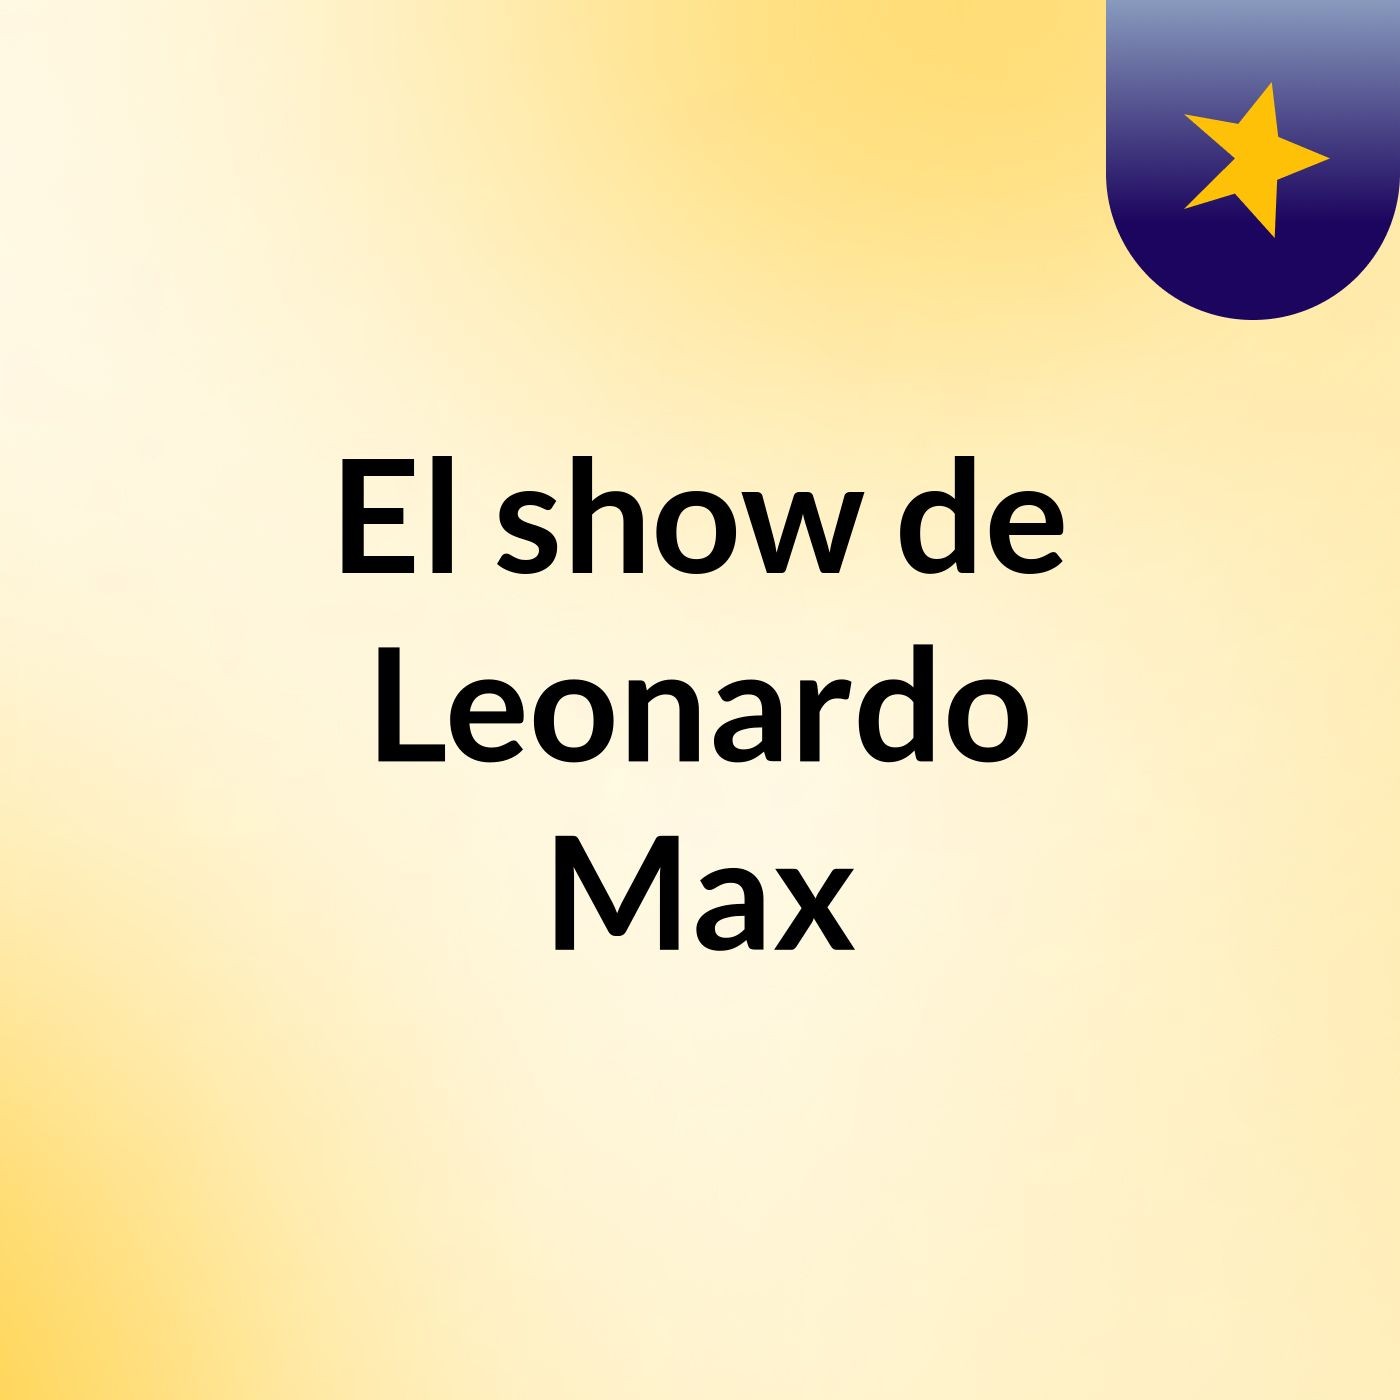 El show de Leonardo Max